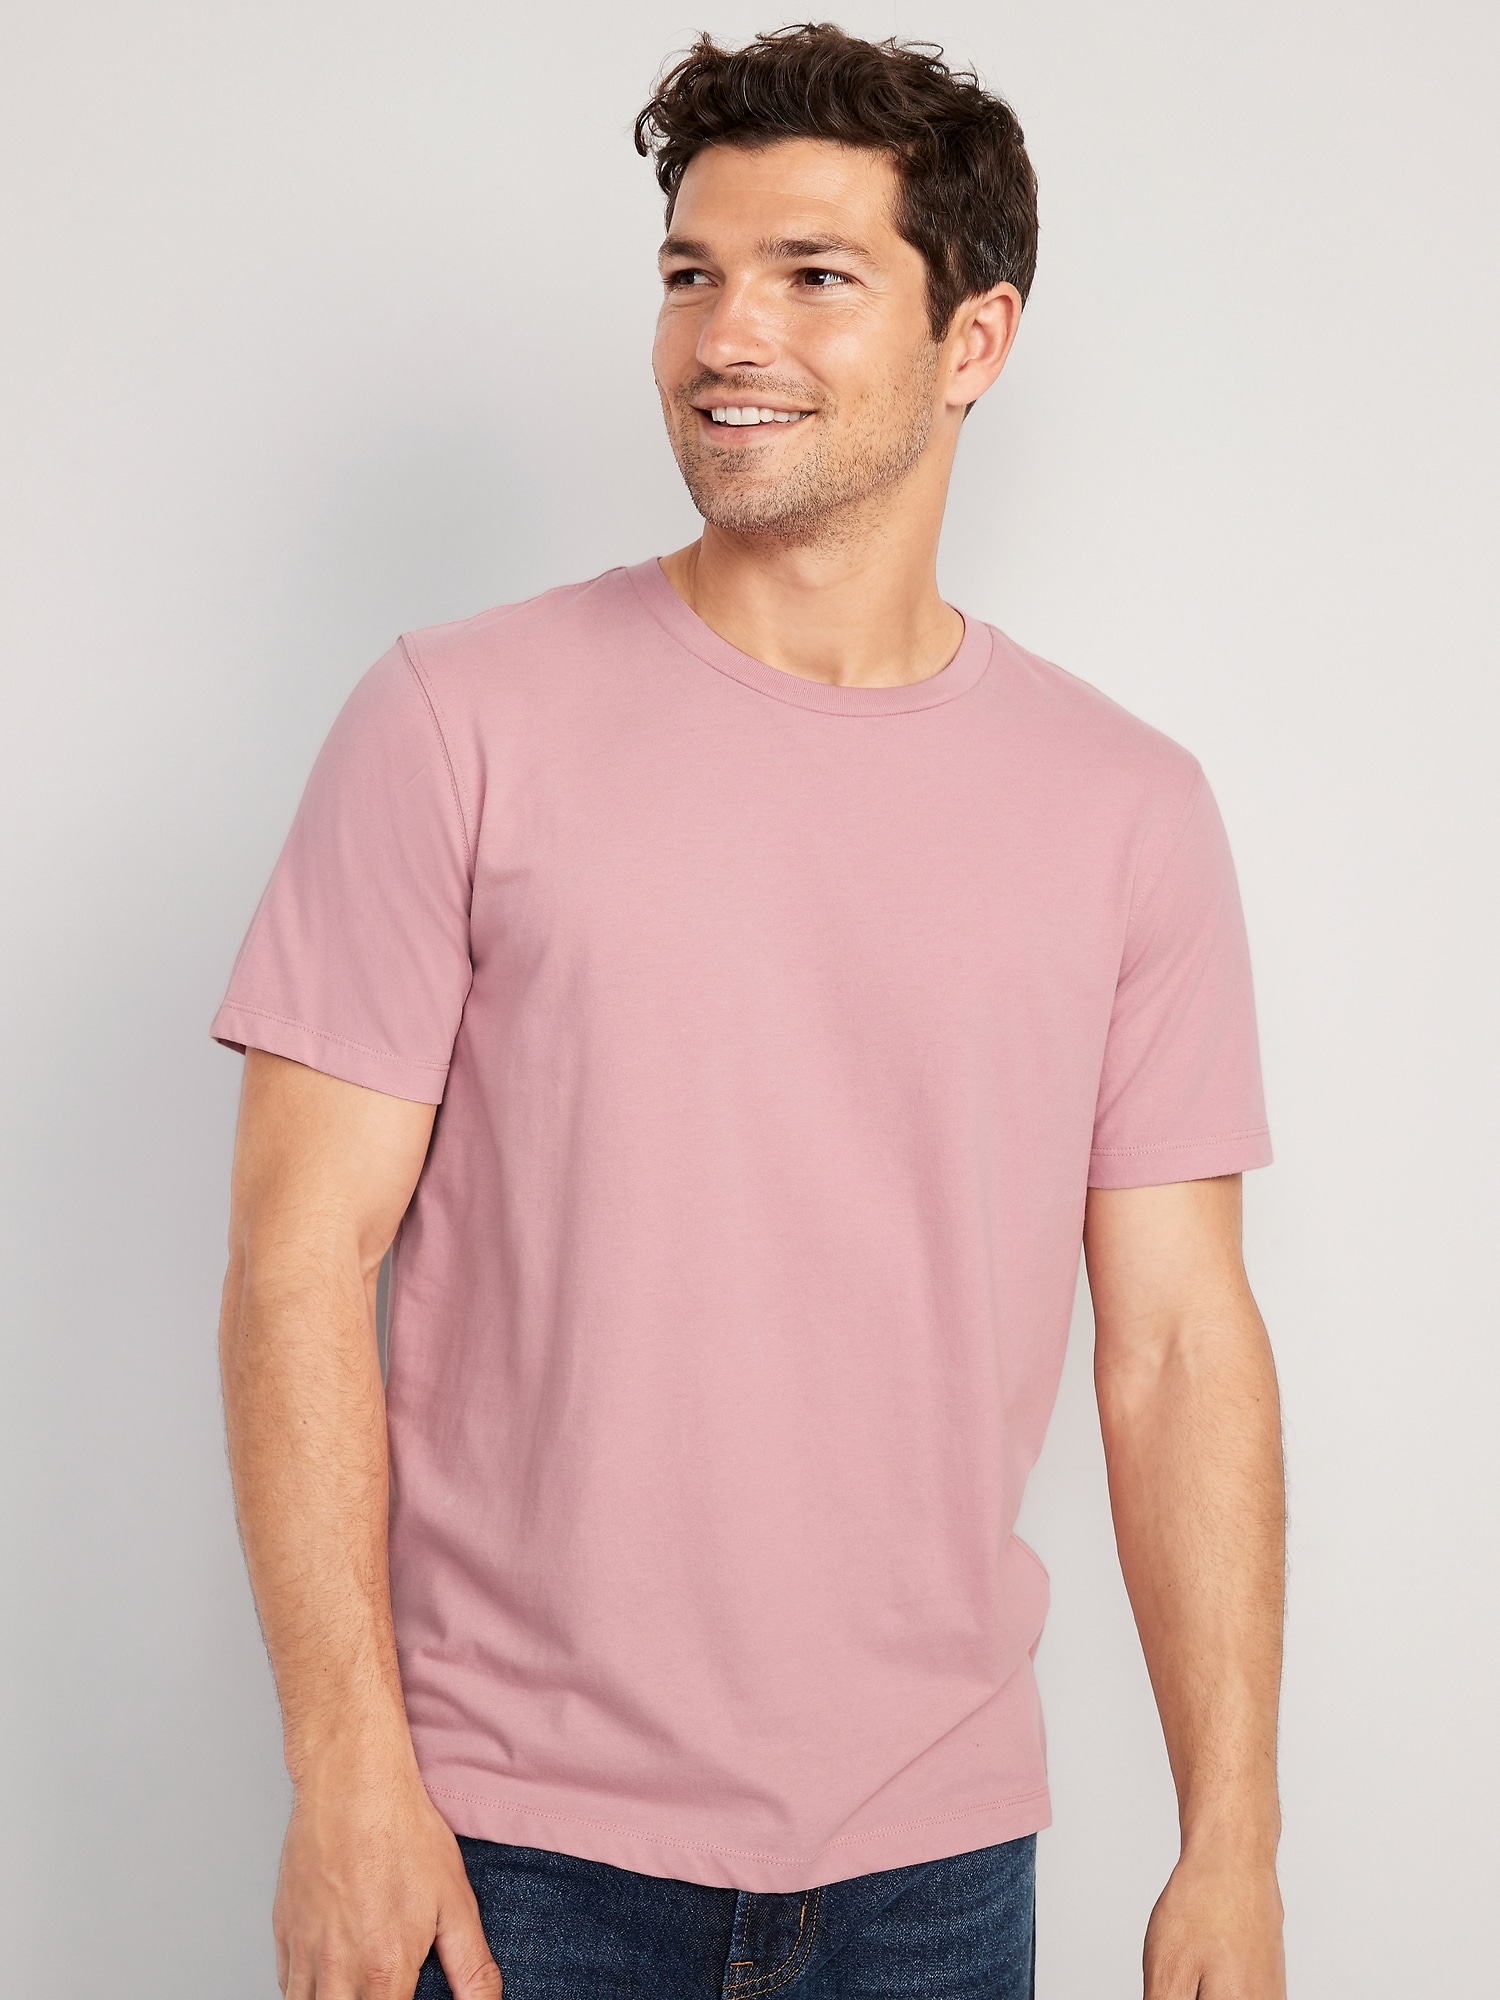 Old Navy Soft-Washed Crew-Neck T-Shirt for Men pink - 832418363